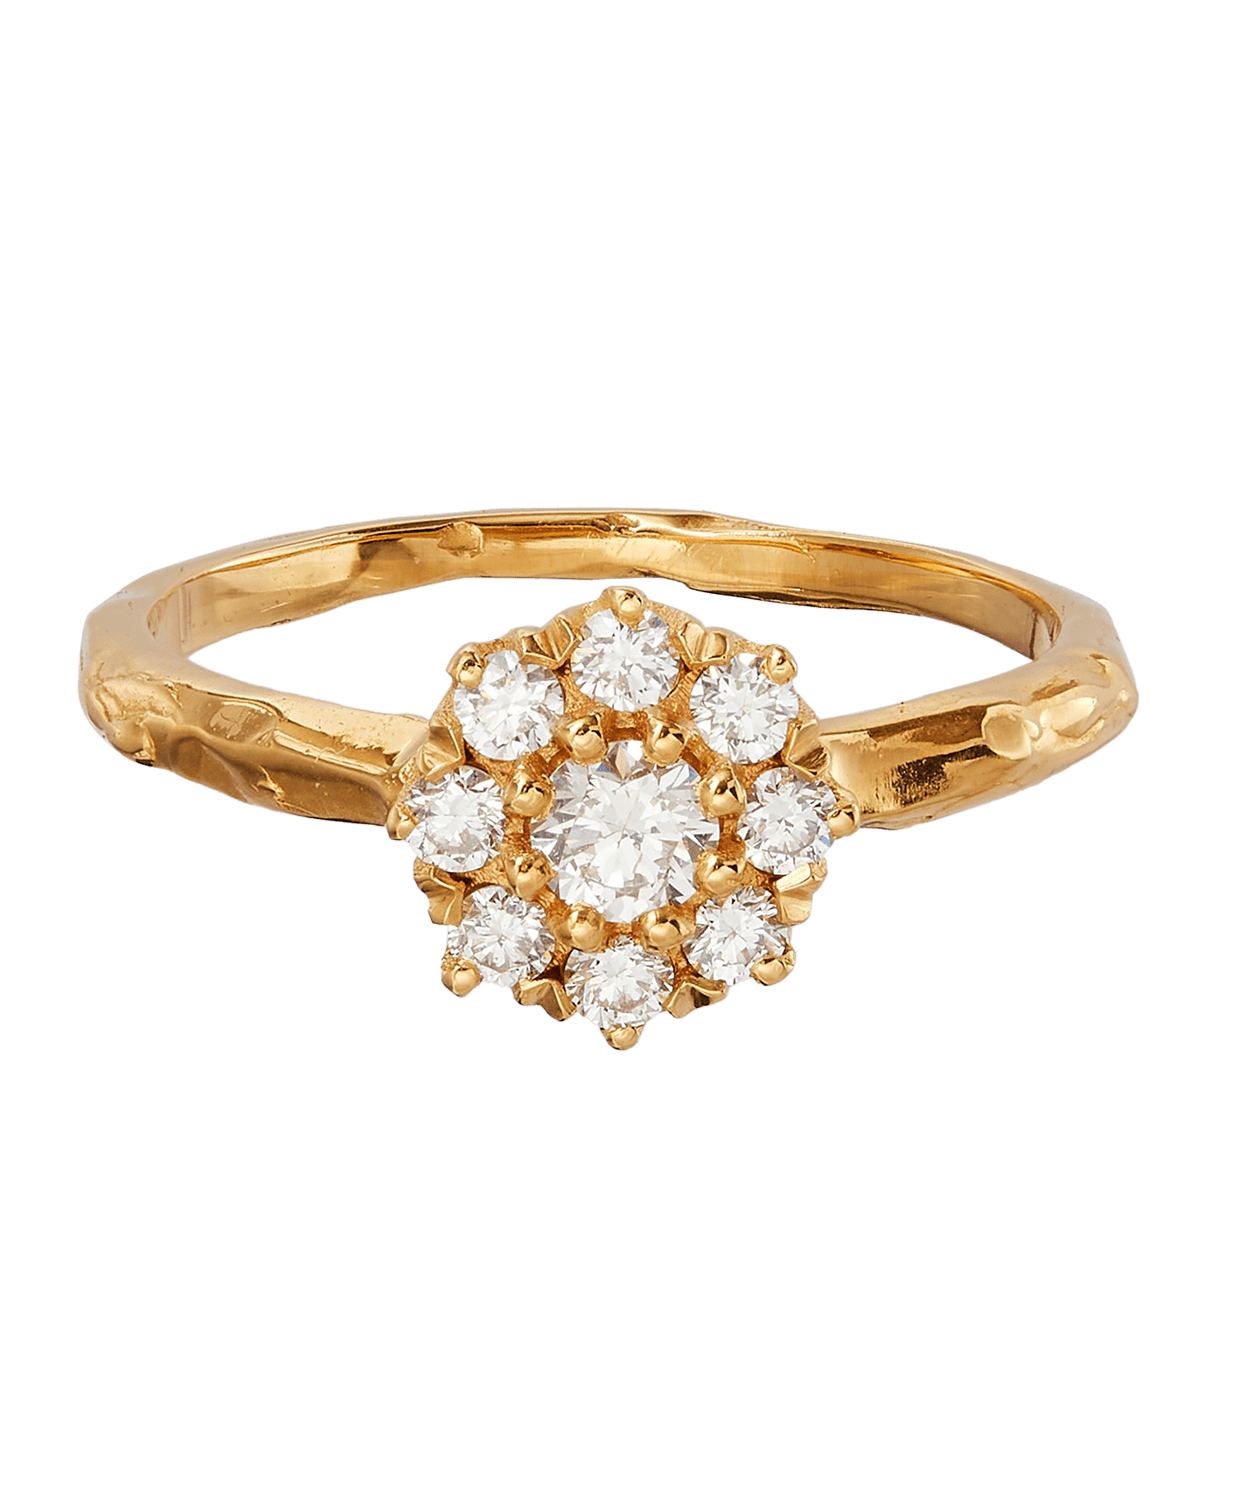 The Celestial History Diamond Ring